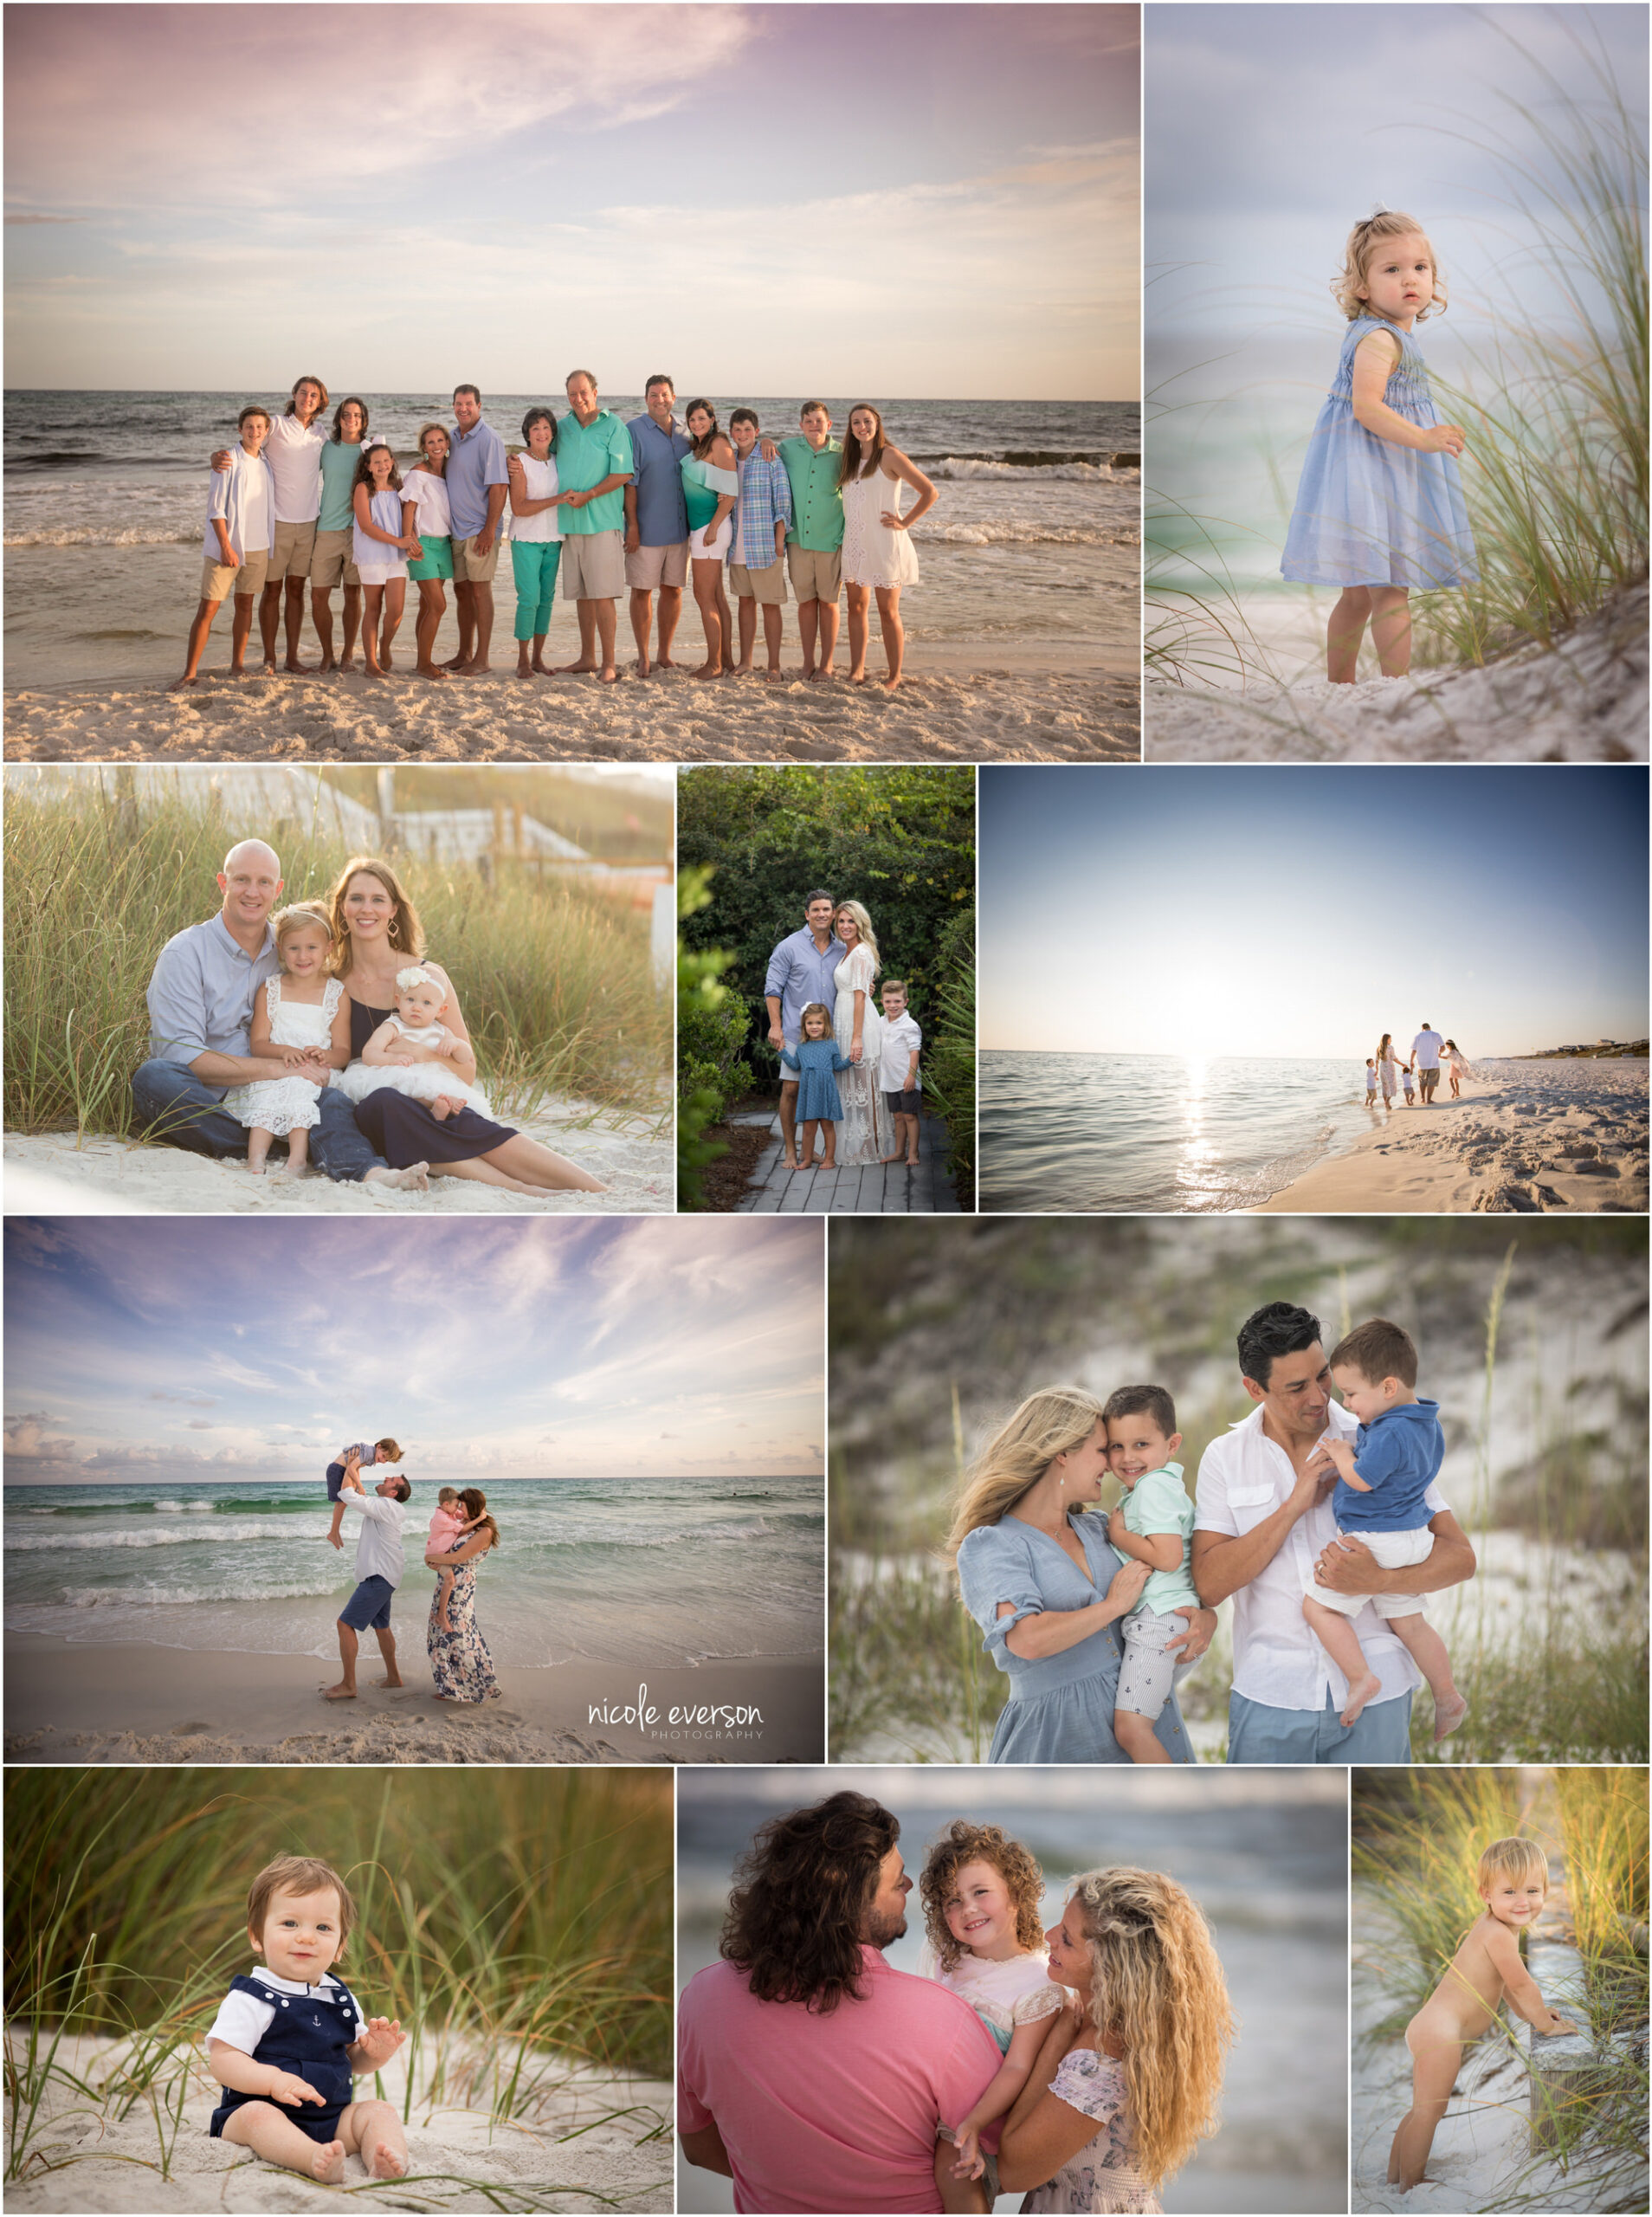 Destin family photographer Nicole Everson Photography offers family and senior photography on Destin beaches